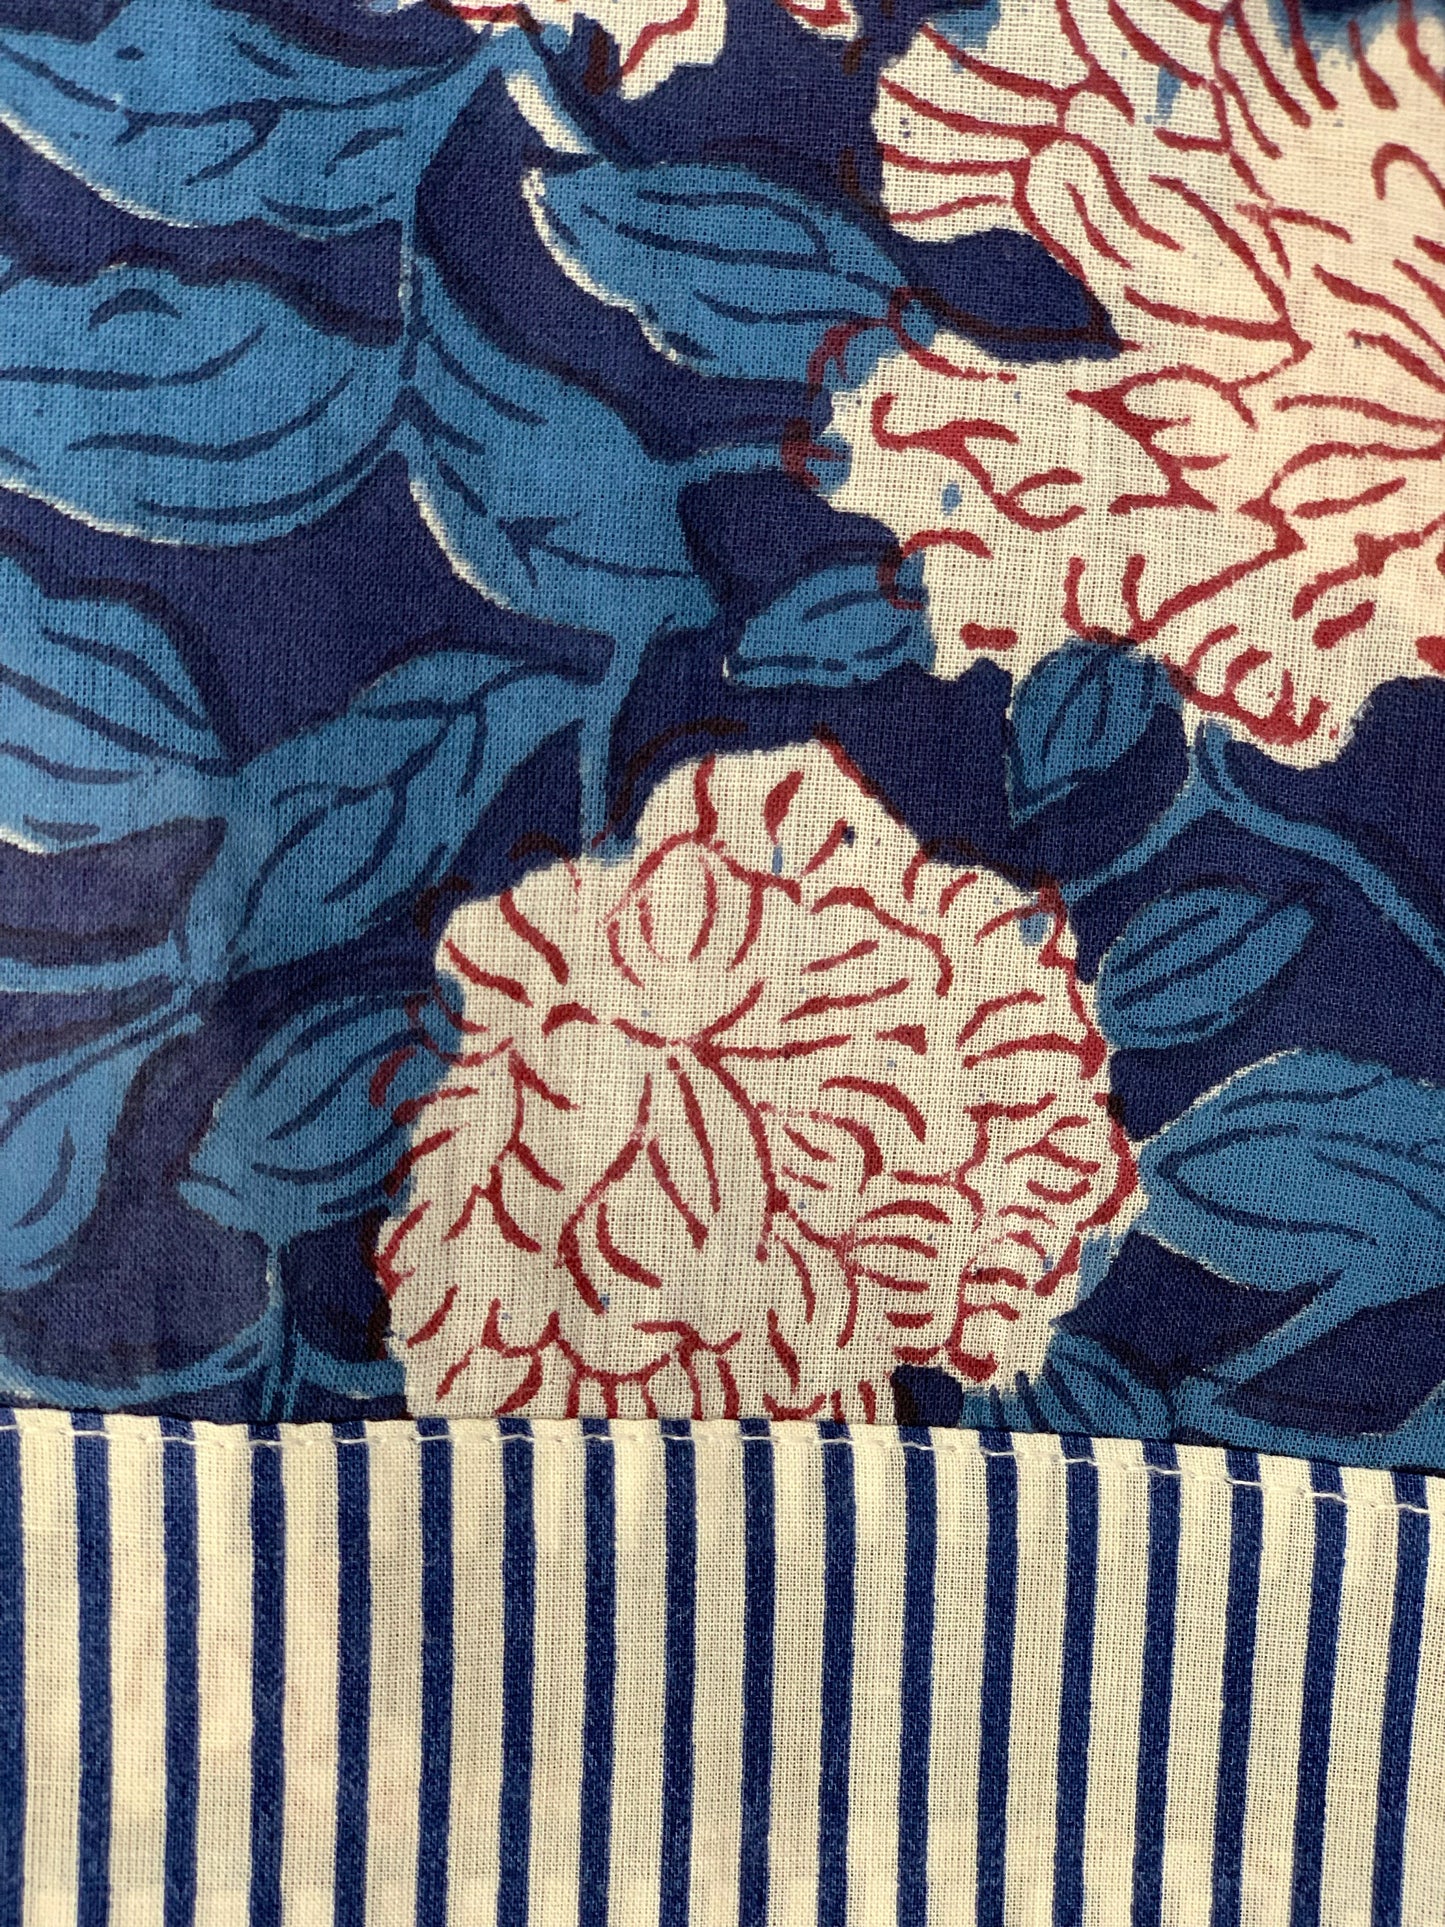 Kimono robe · Pure cotton block print handmade in India · Bride robe · Bridesmaid robe · Boho kimono · Blue white flowers